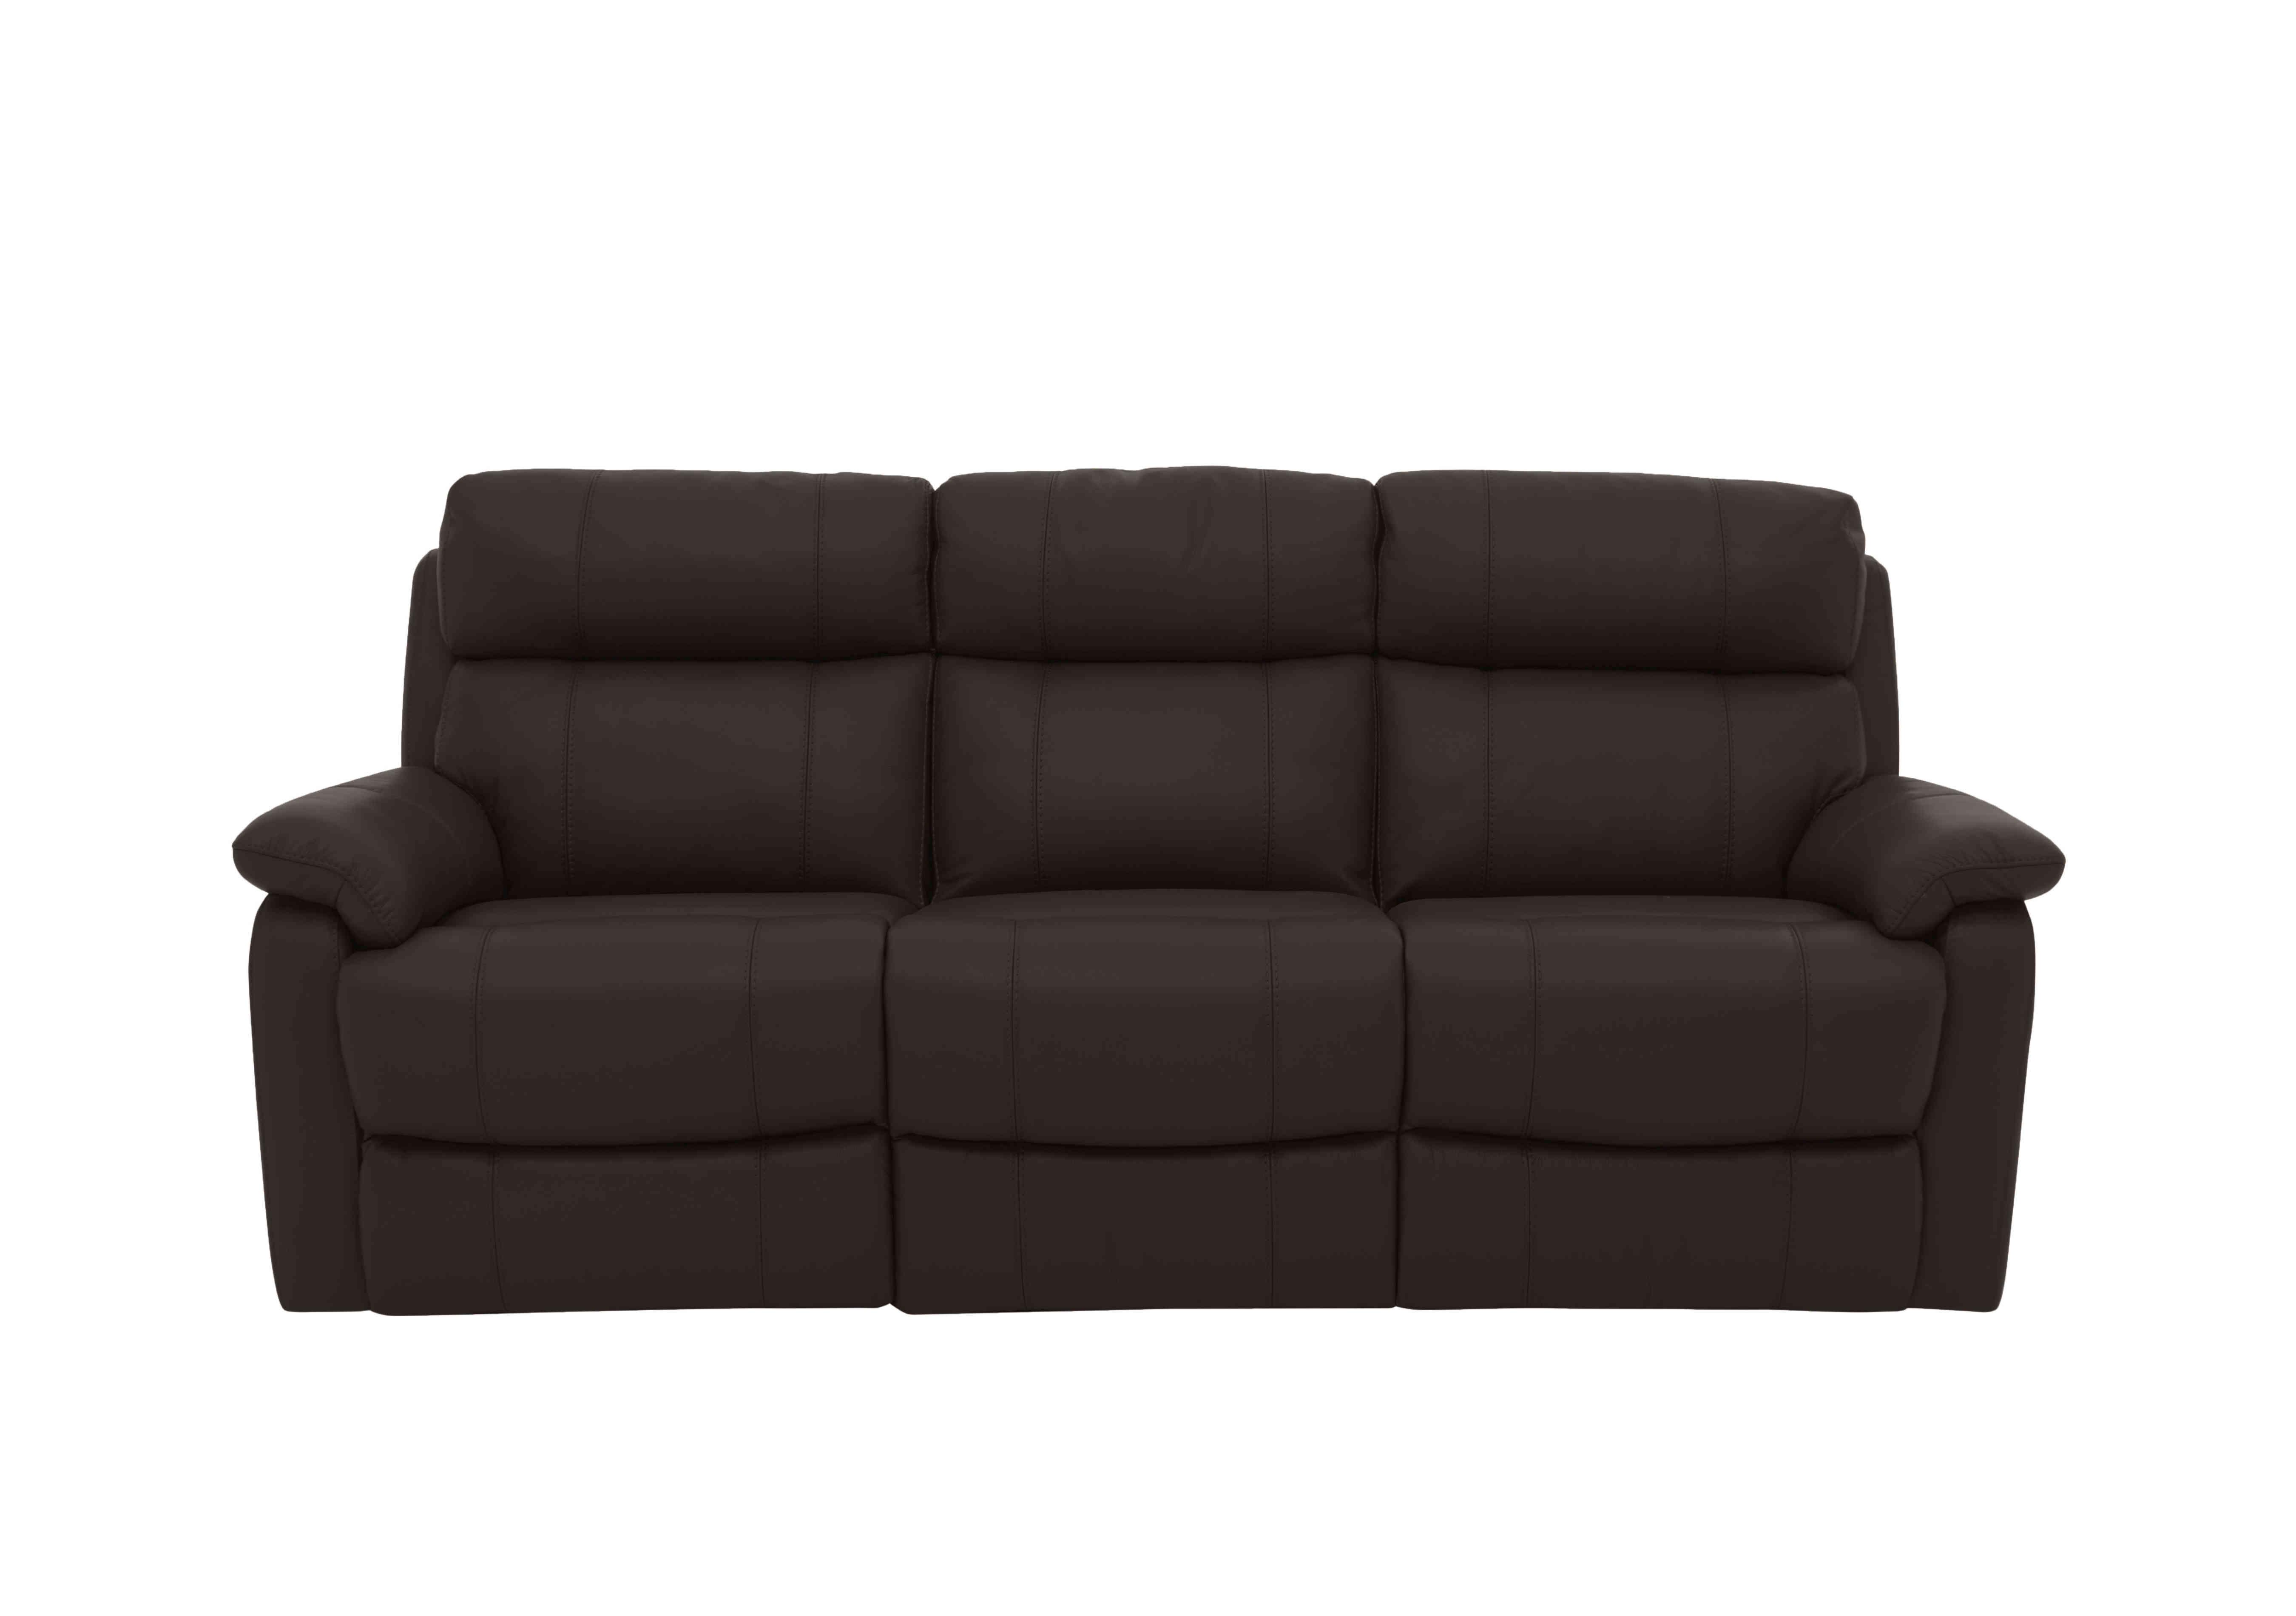 Relax Station Komodo 3 Seater Power Leather Sofa in Bv-1748 Dark Chocolate on Furniture Village